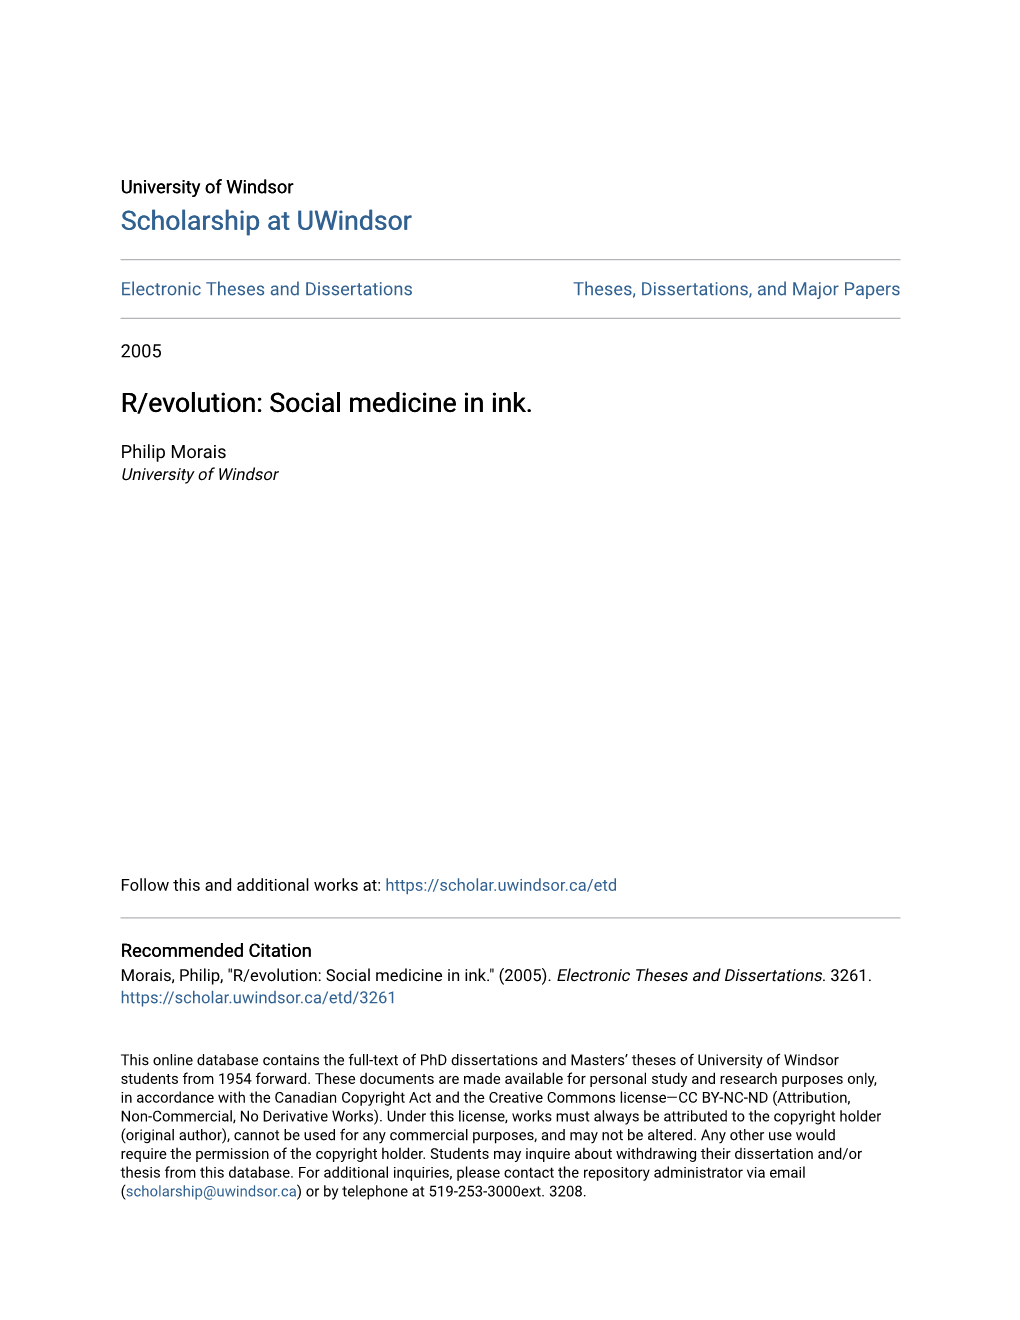 R/Evolution: Social Medicine in Ink